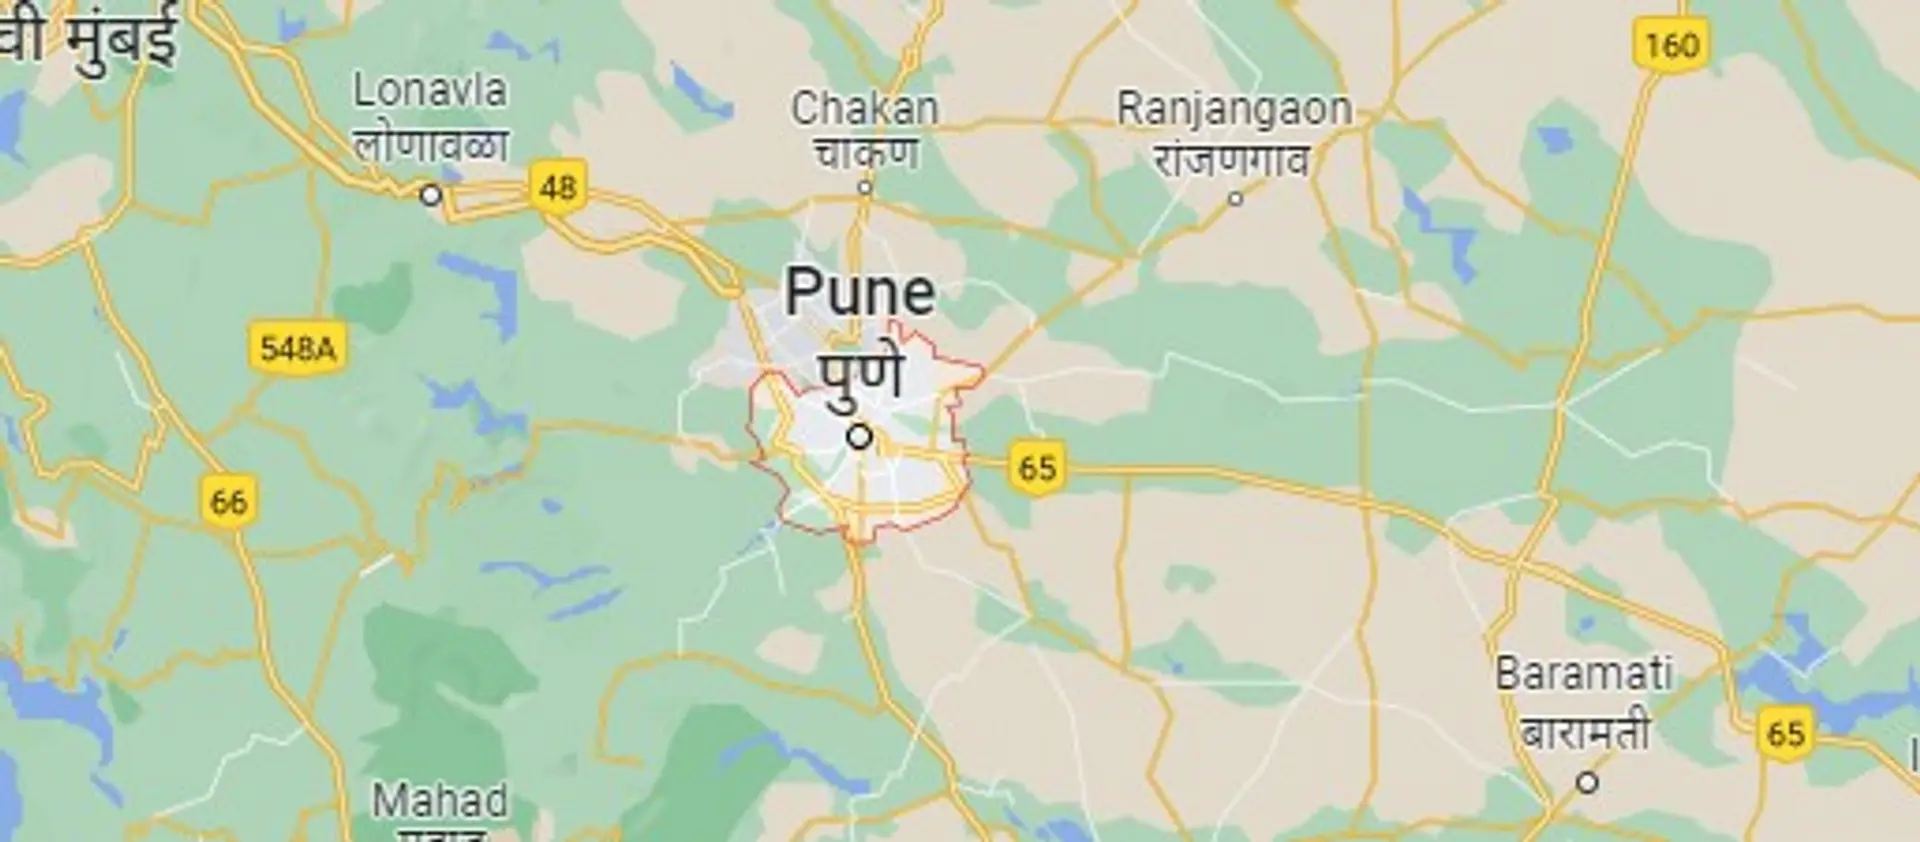 Pune Map, Maharashtra, City Information and Facts